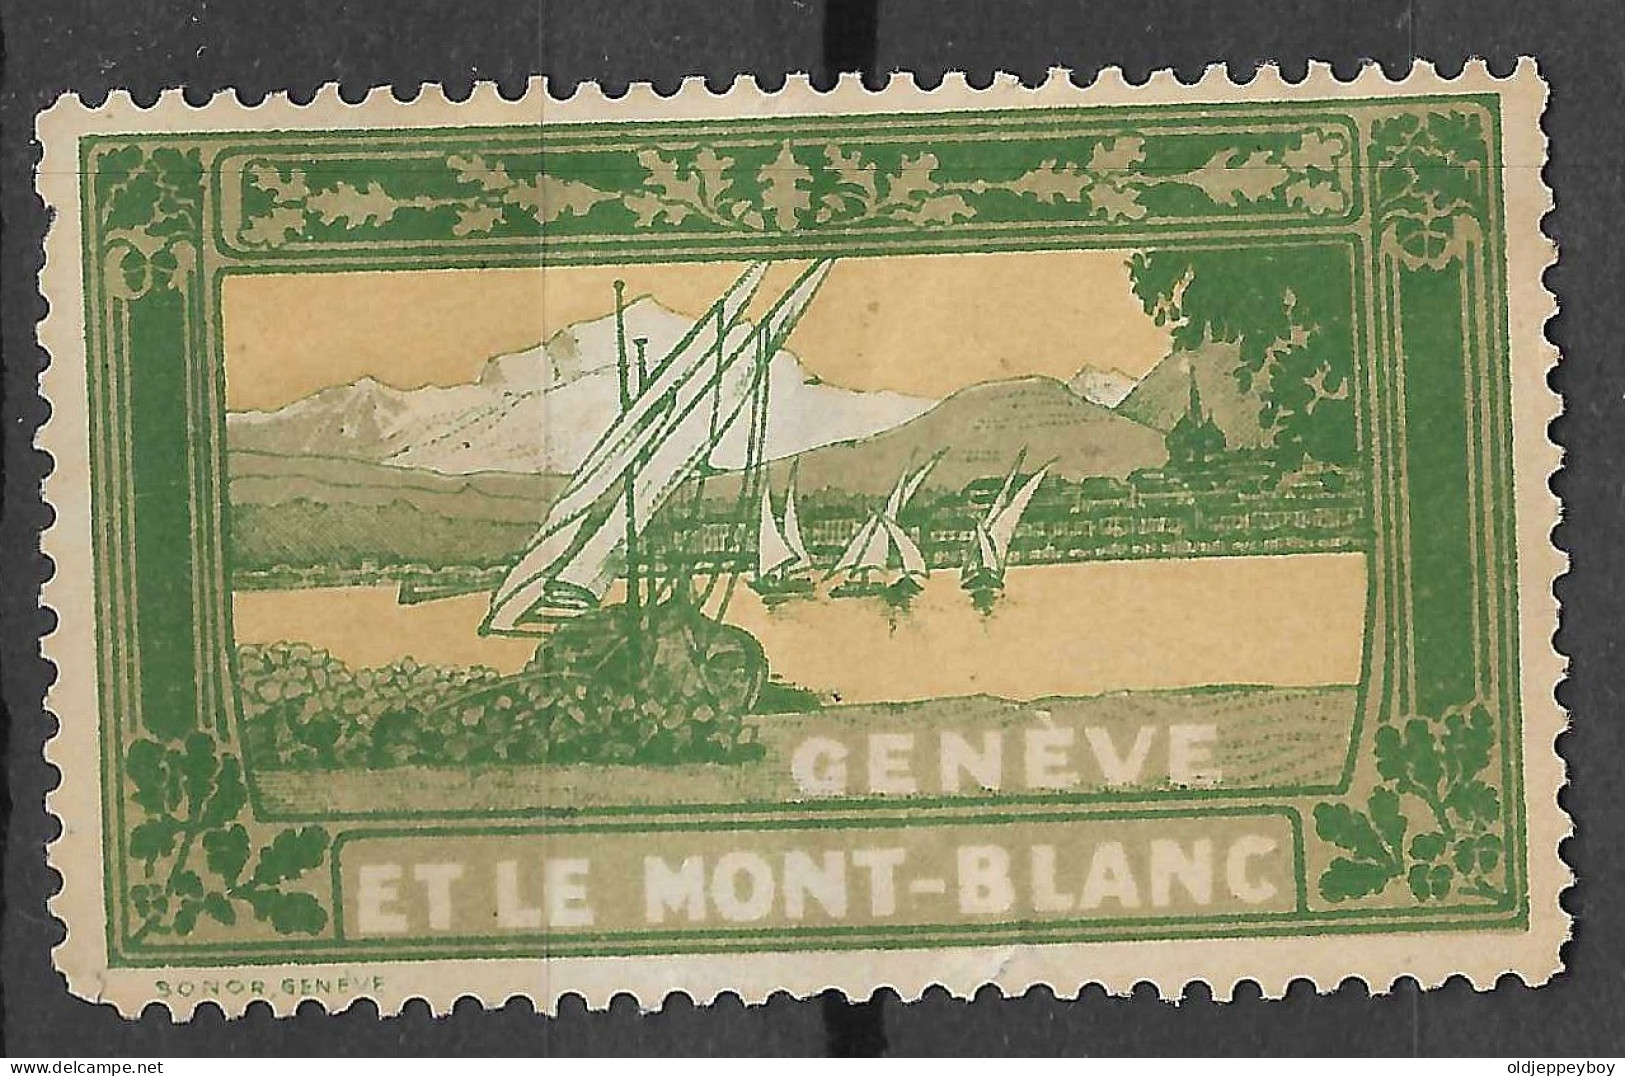 WWI WW1 Vignette Cinderella GENEVE Et Le MONT-BLANC Mountain Montagne Vignette Poster Stamp Label Switzerland Suisse - Vignetten (Erinnophilie)